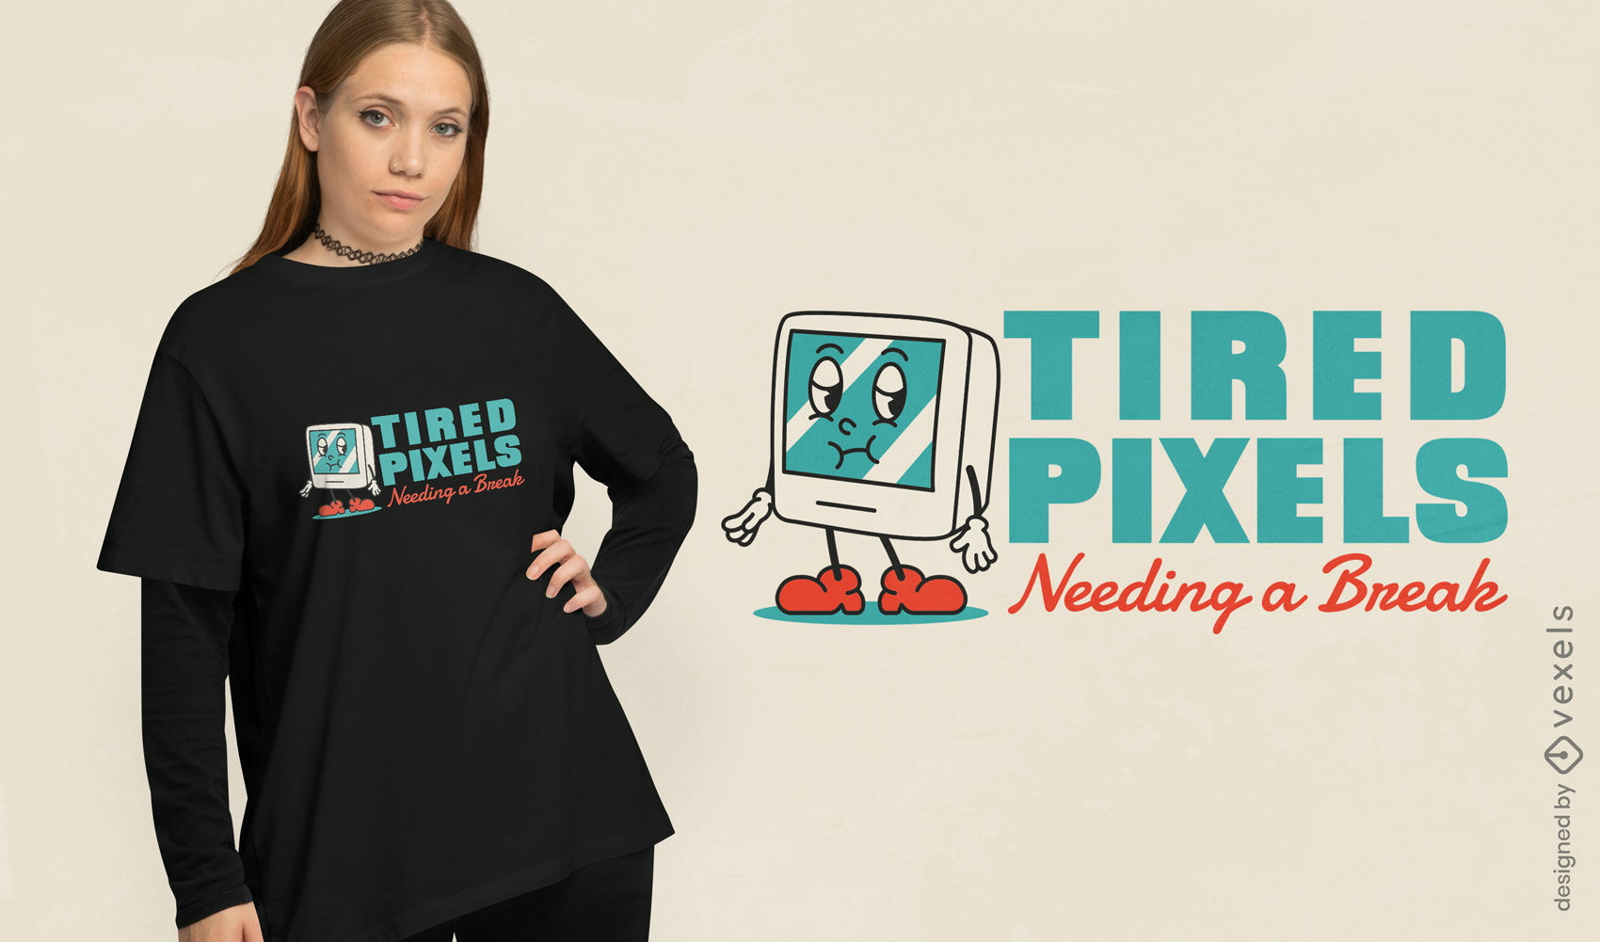 Tired pixels needing a break t-shirt design